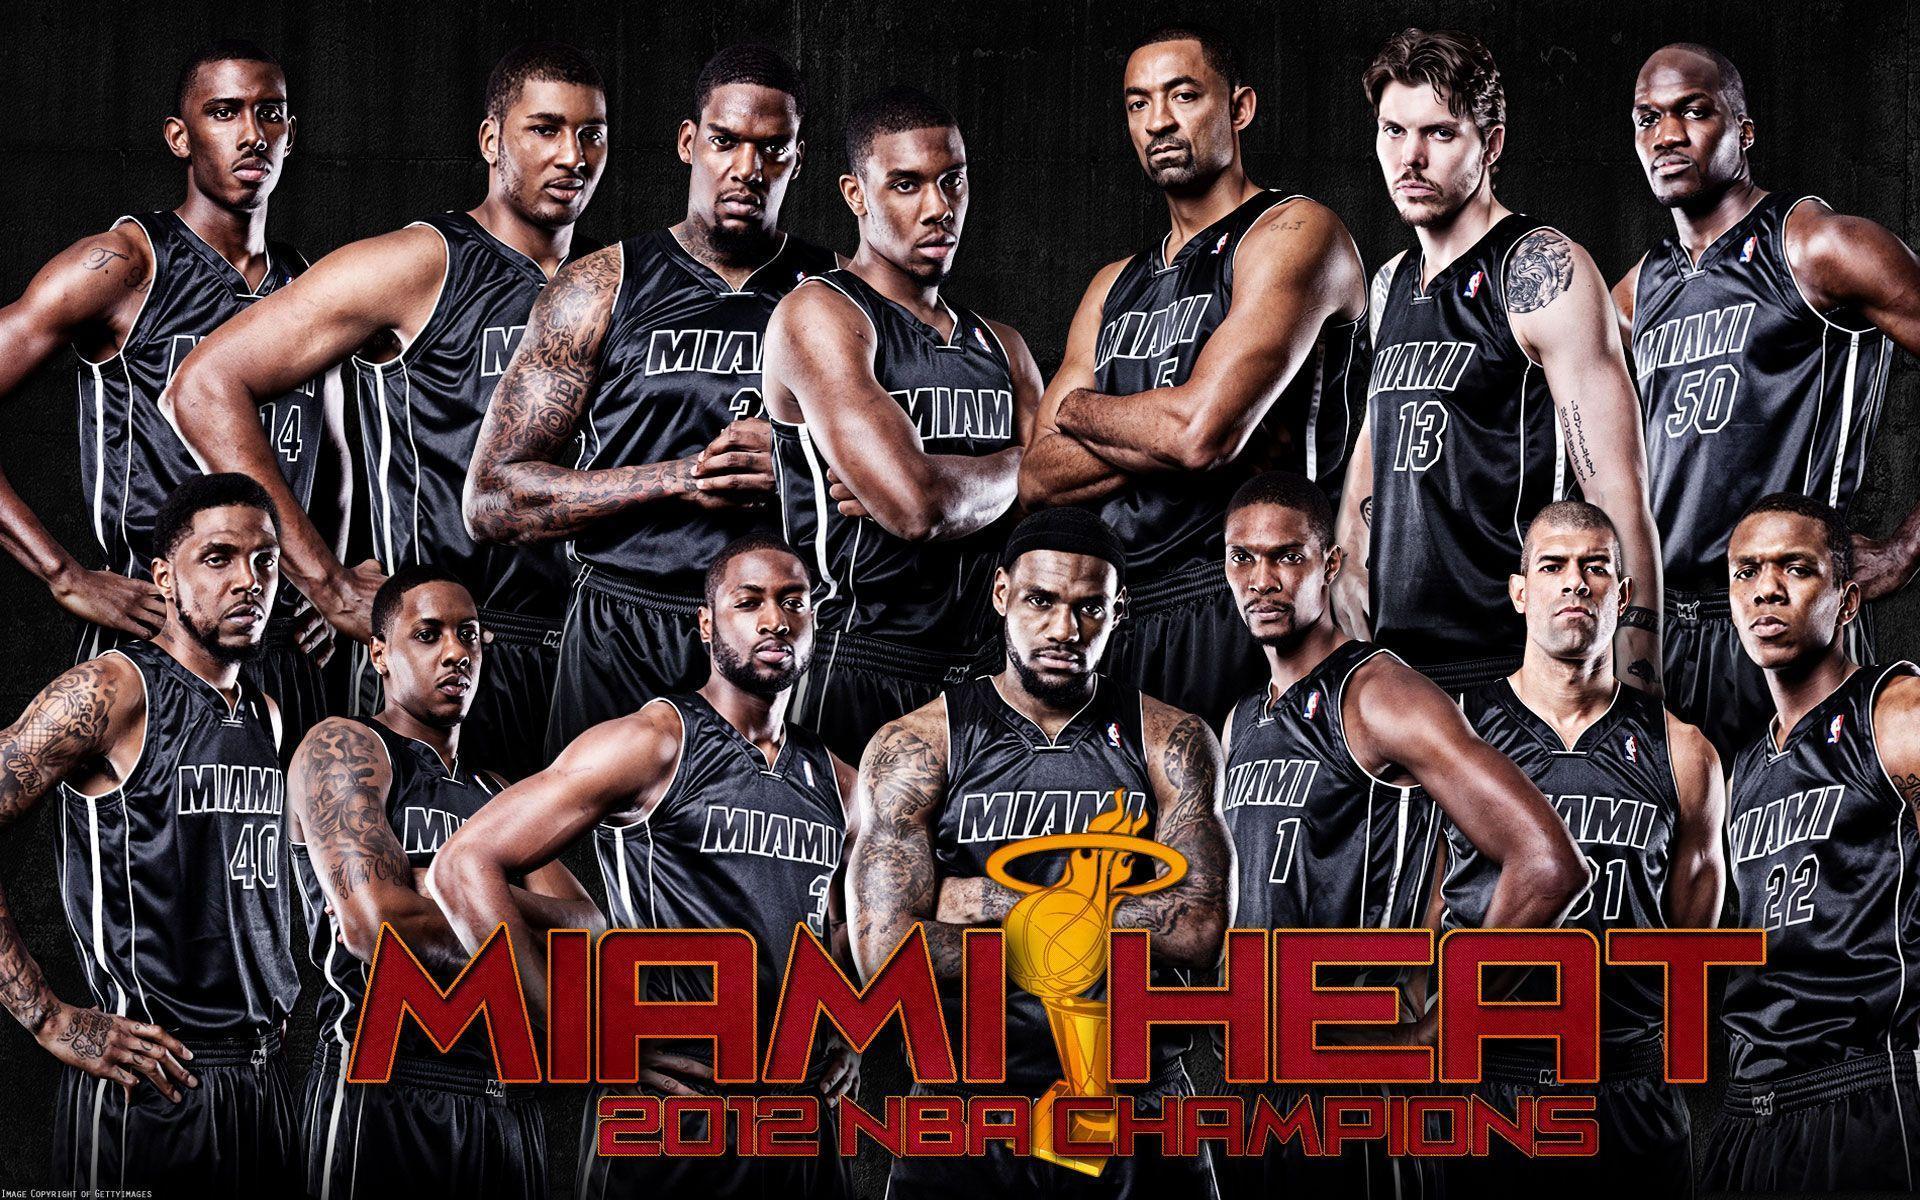 Miami Heat 2012 NBA Champions Roster Wallpaper. Basketball